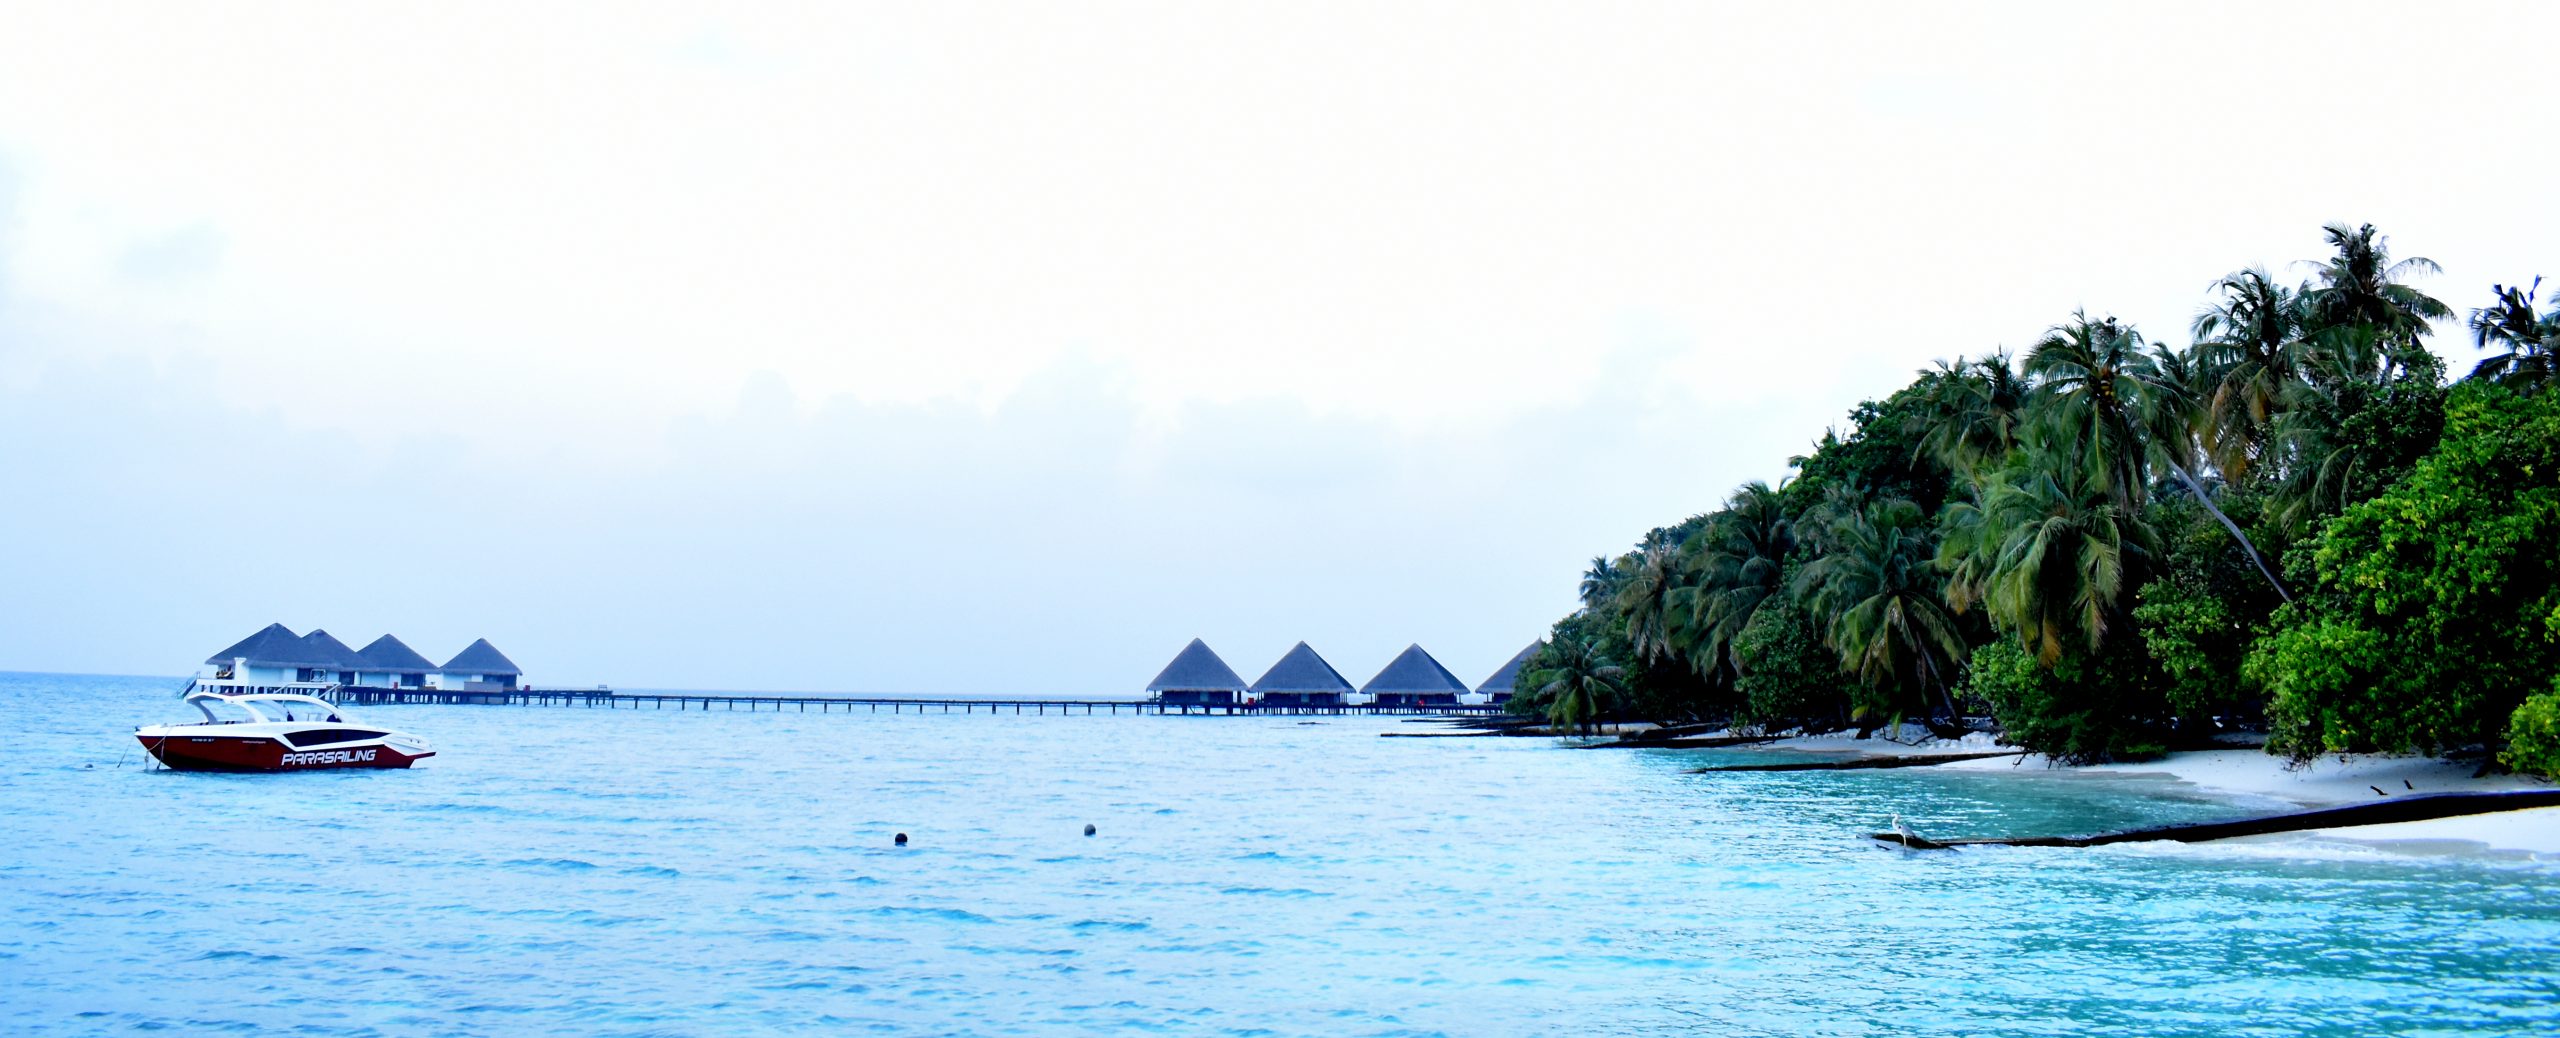 Adaaran Club Rannalhi, Maldives